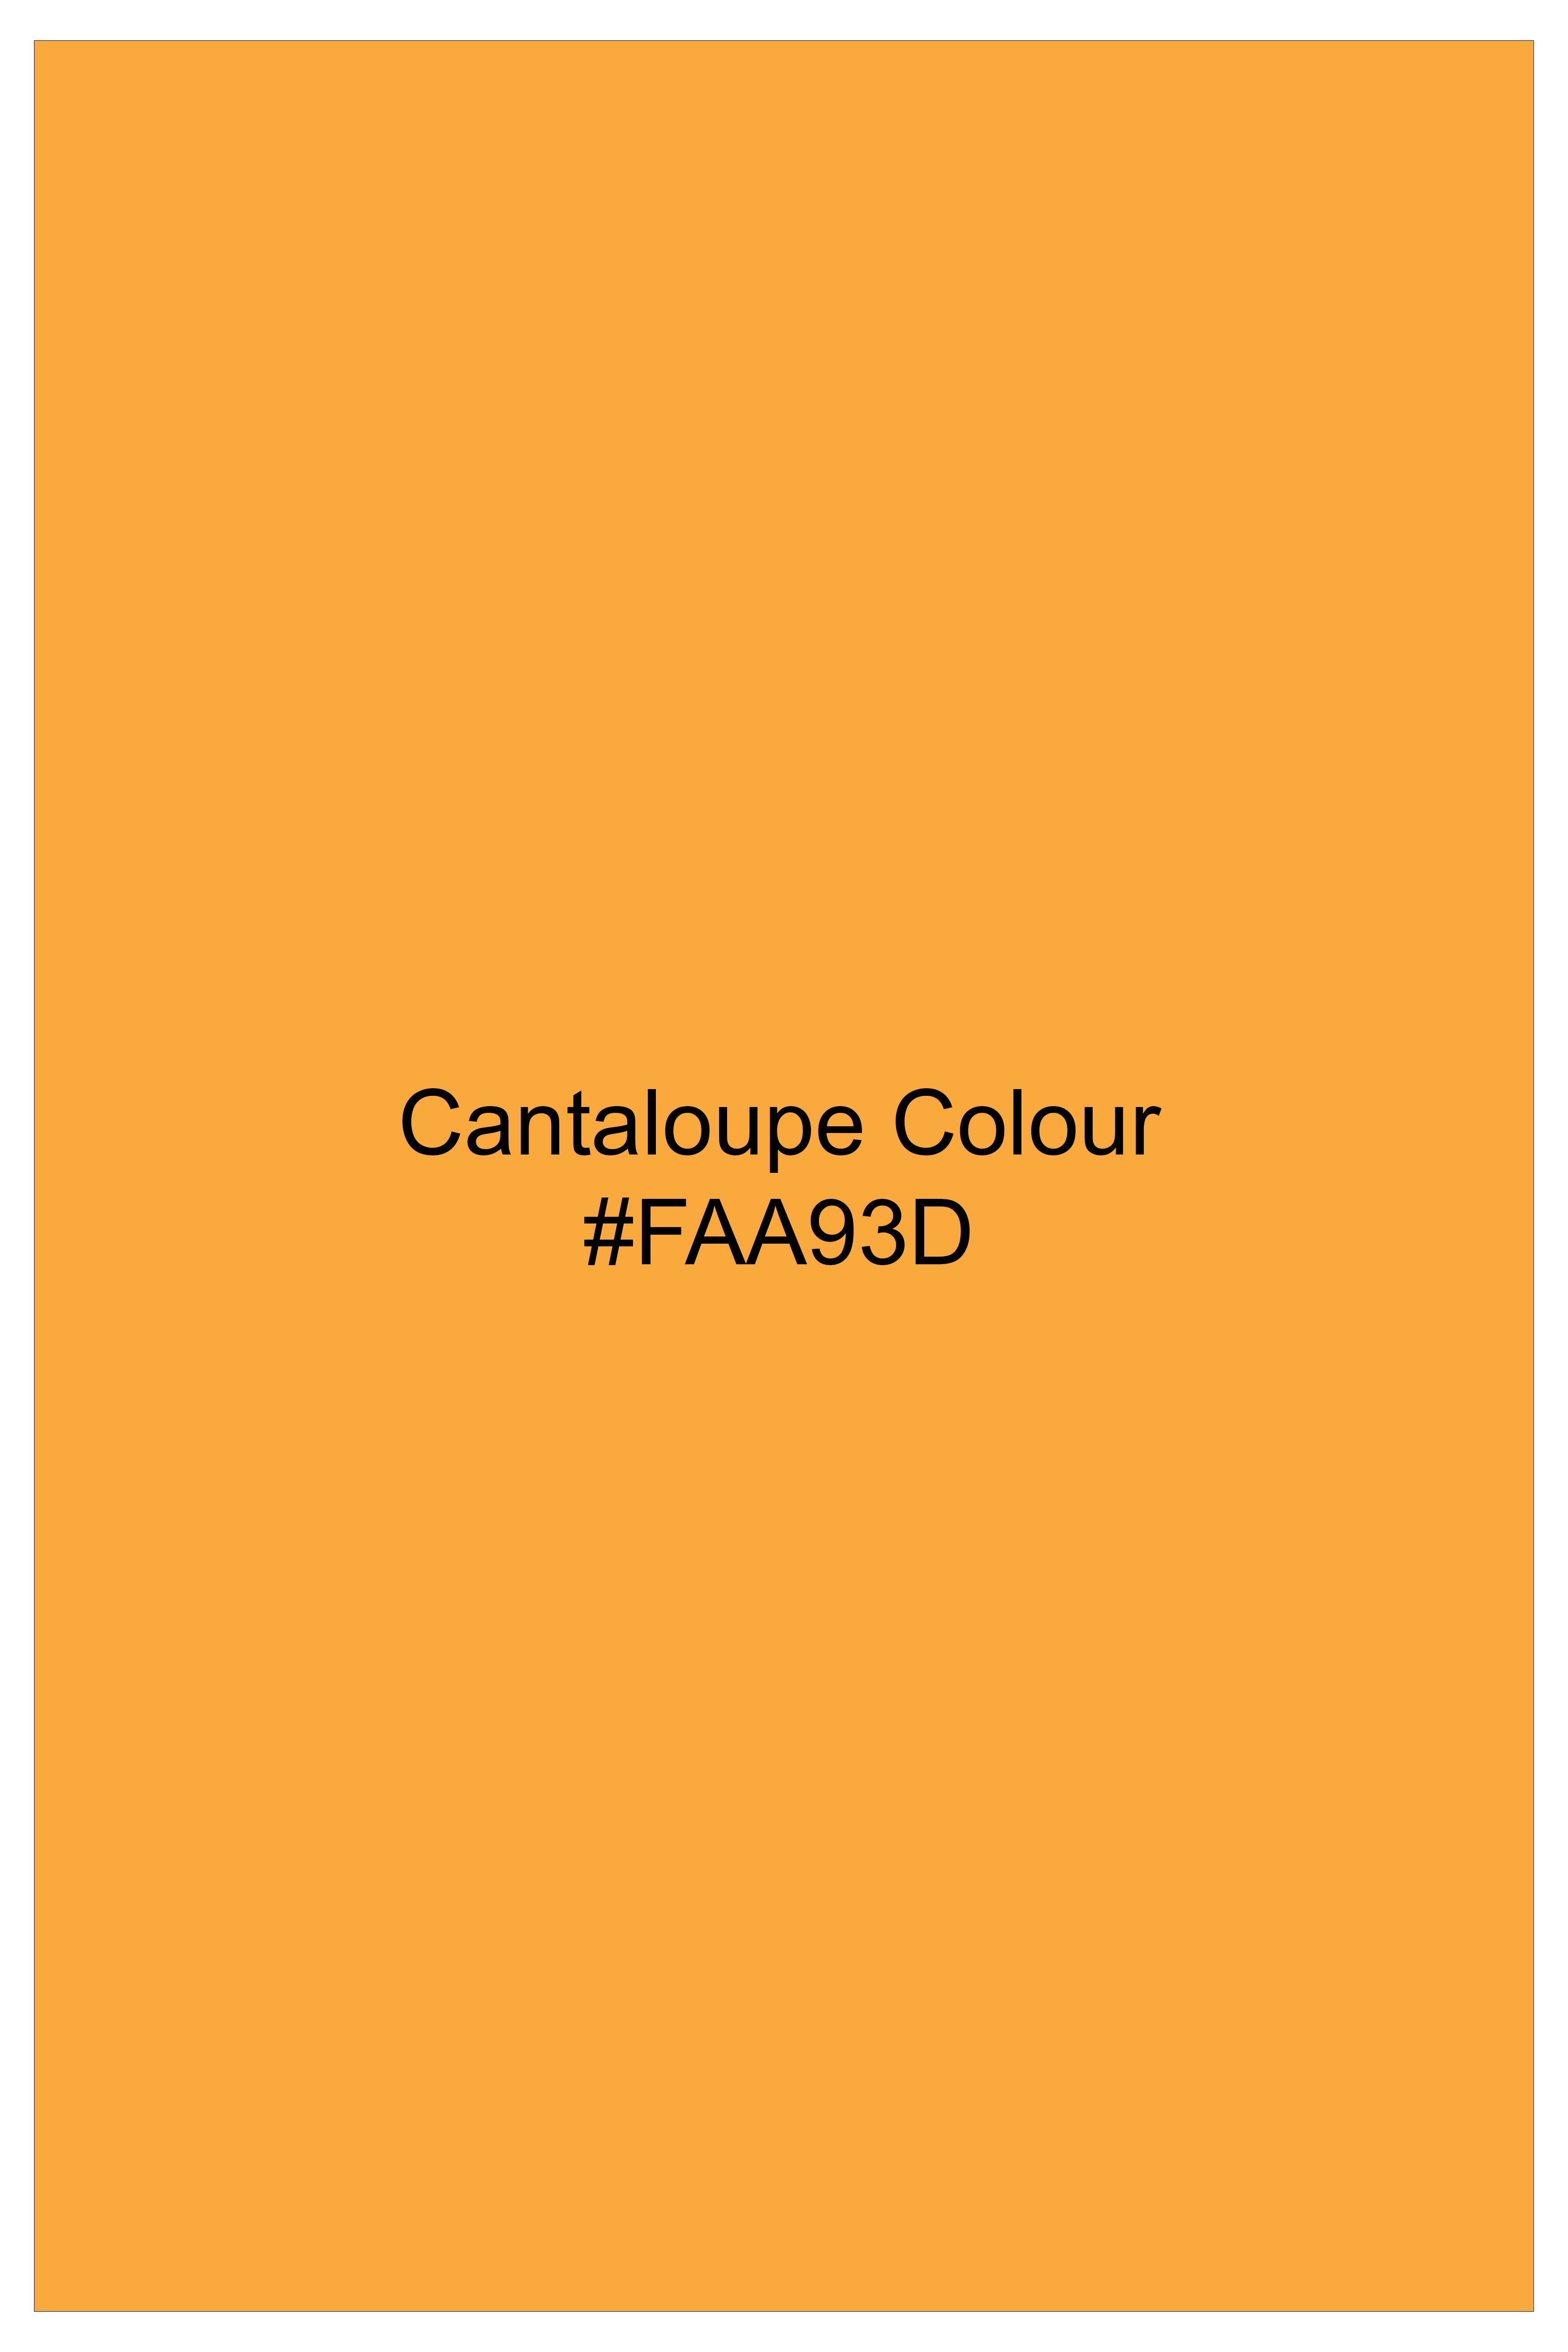 Cantaloupe Yellow herringbone Windowpane Bandhgala Suit